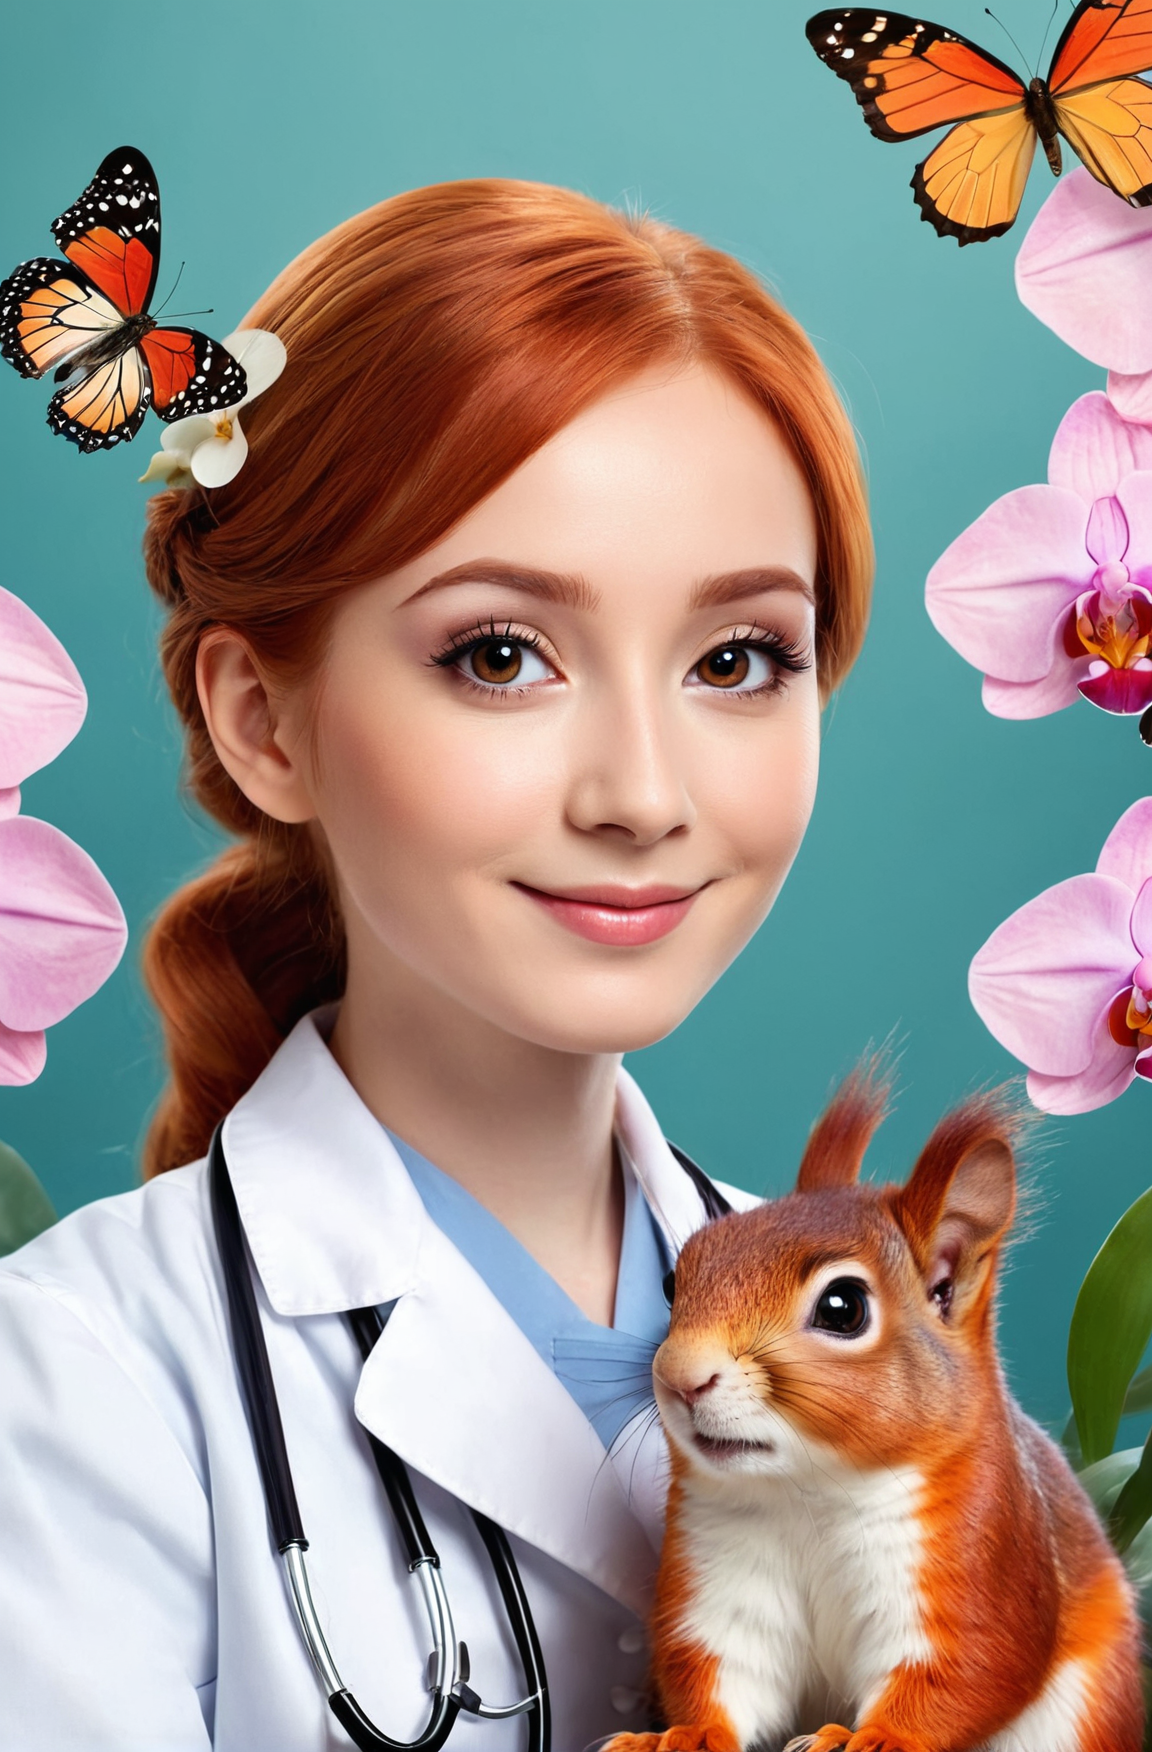 Character portrait of cute smiling red hair woman wearing doctor uniform, big dark melancholic eyes, an squirrel sitting n...